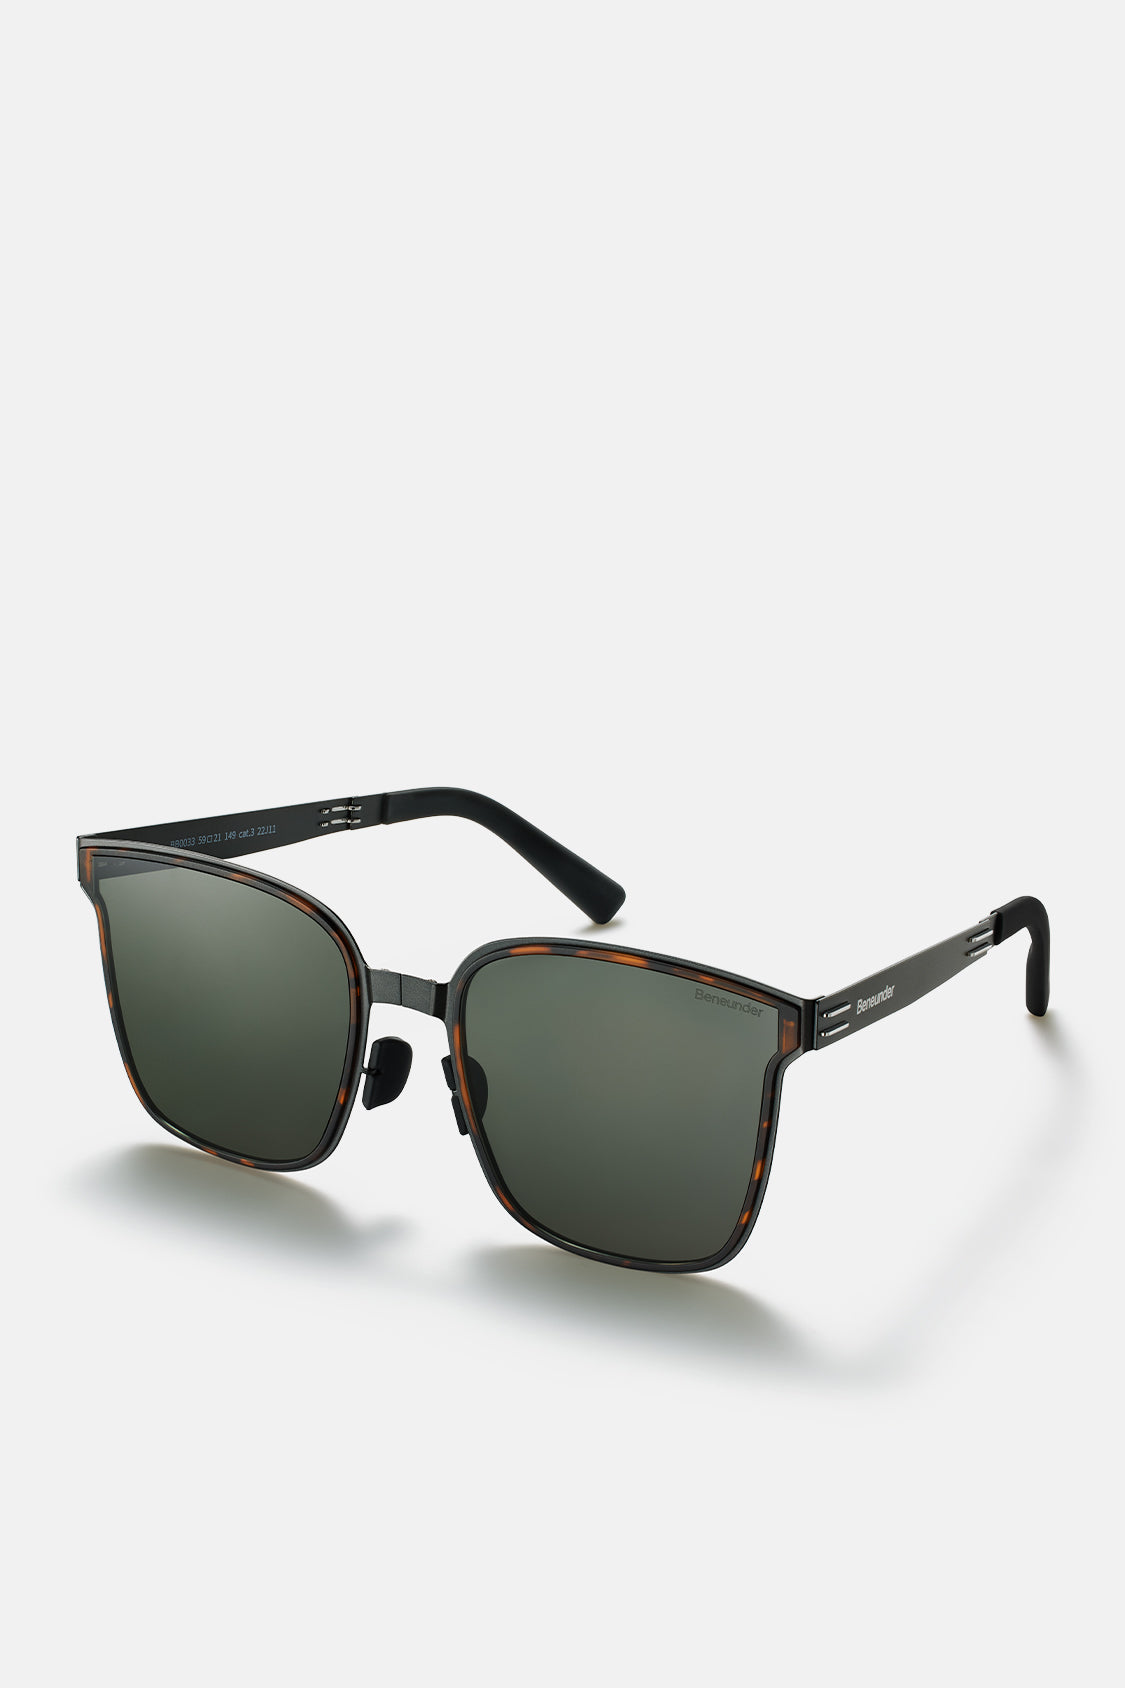 beneunder men's slimline polarized folding sunglasses shades #color_black